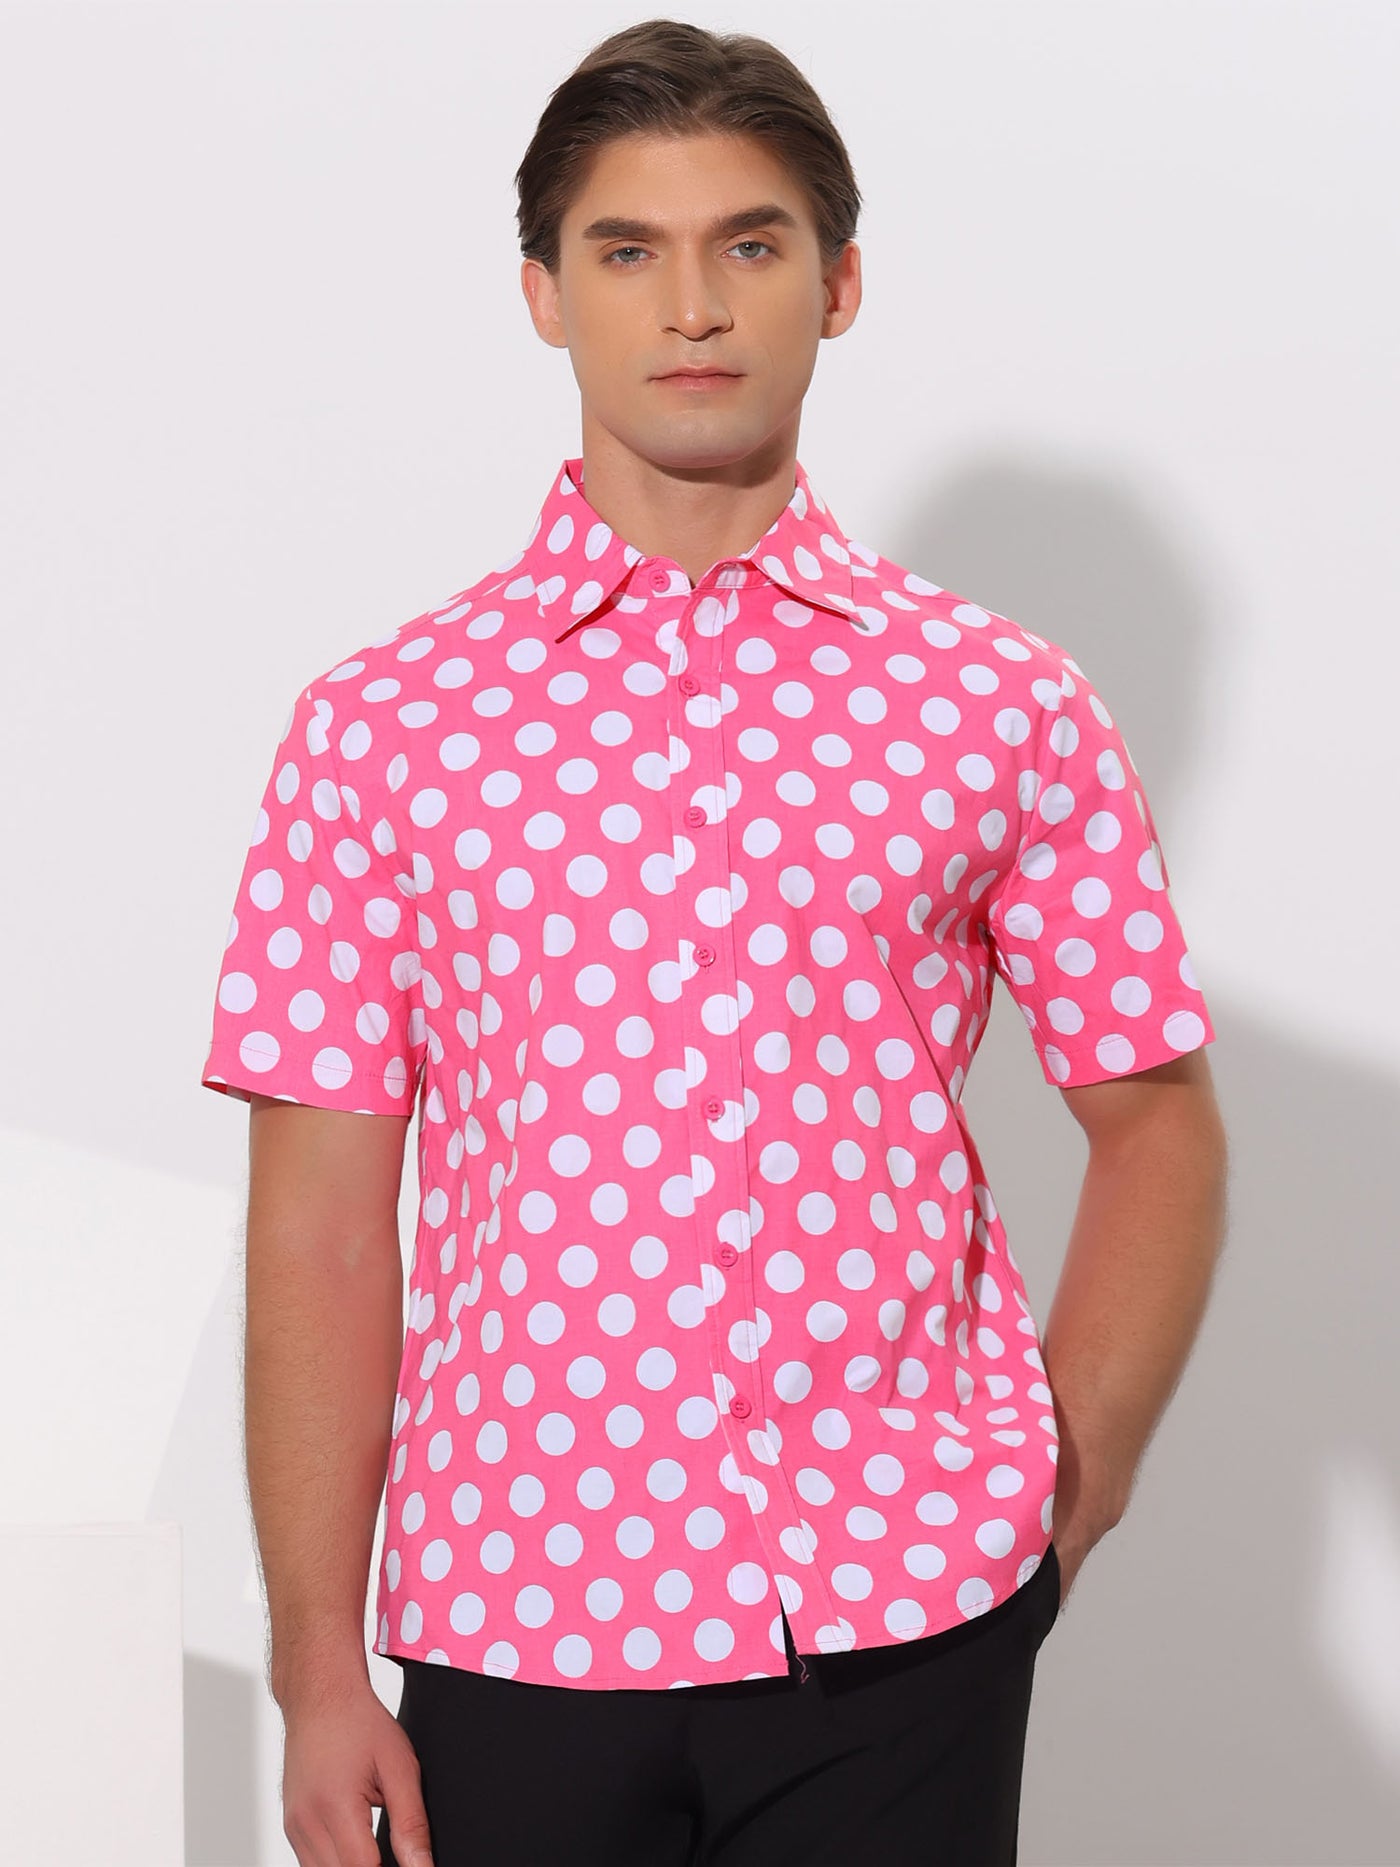 Bublédon Polka Dots Shirt for Men's Summer Short Sleeves Button Printed Dress Shirts